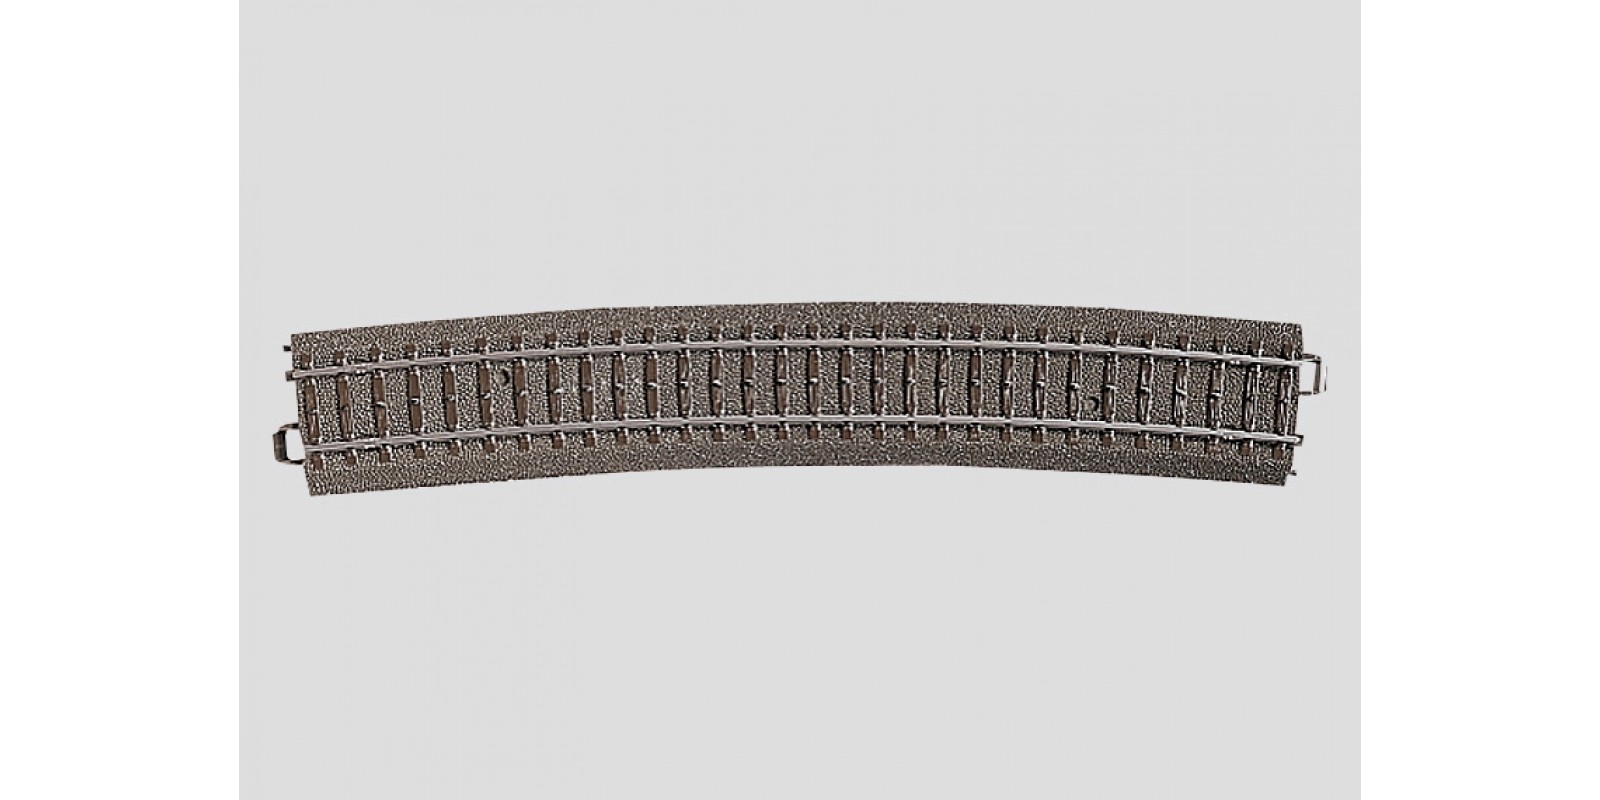 024912 Curved Track r1114,6 mm,12,1 Gr.